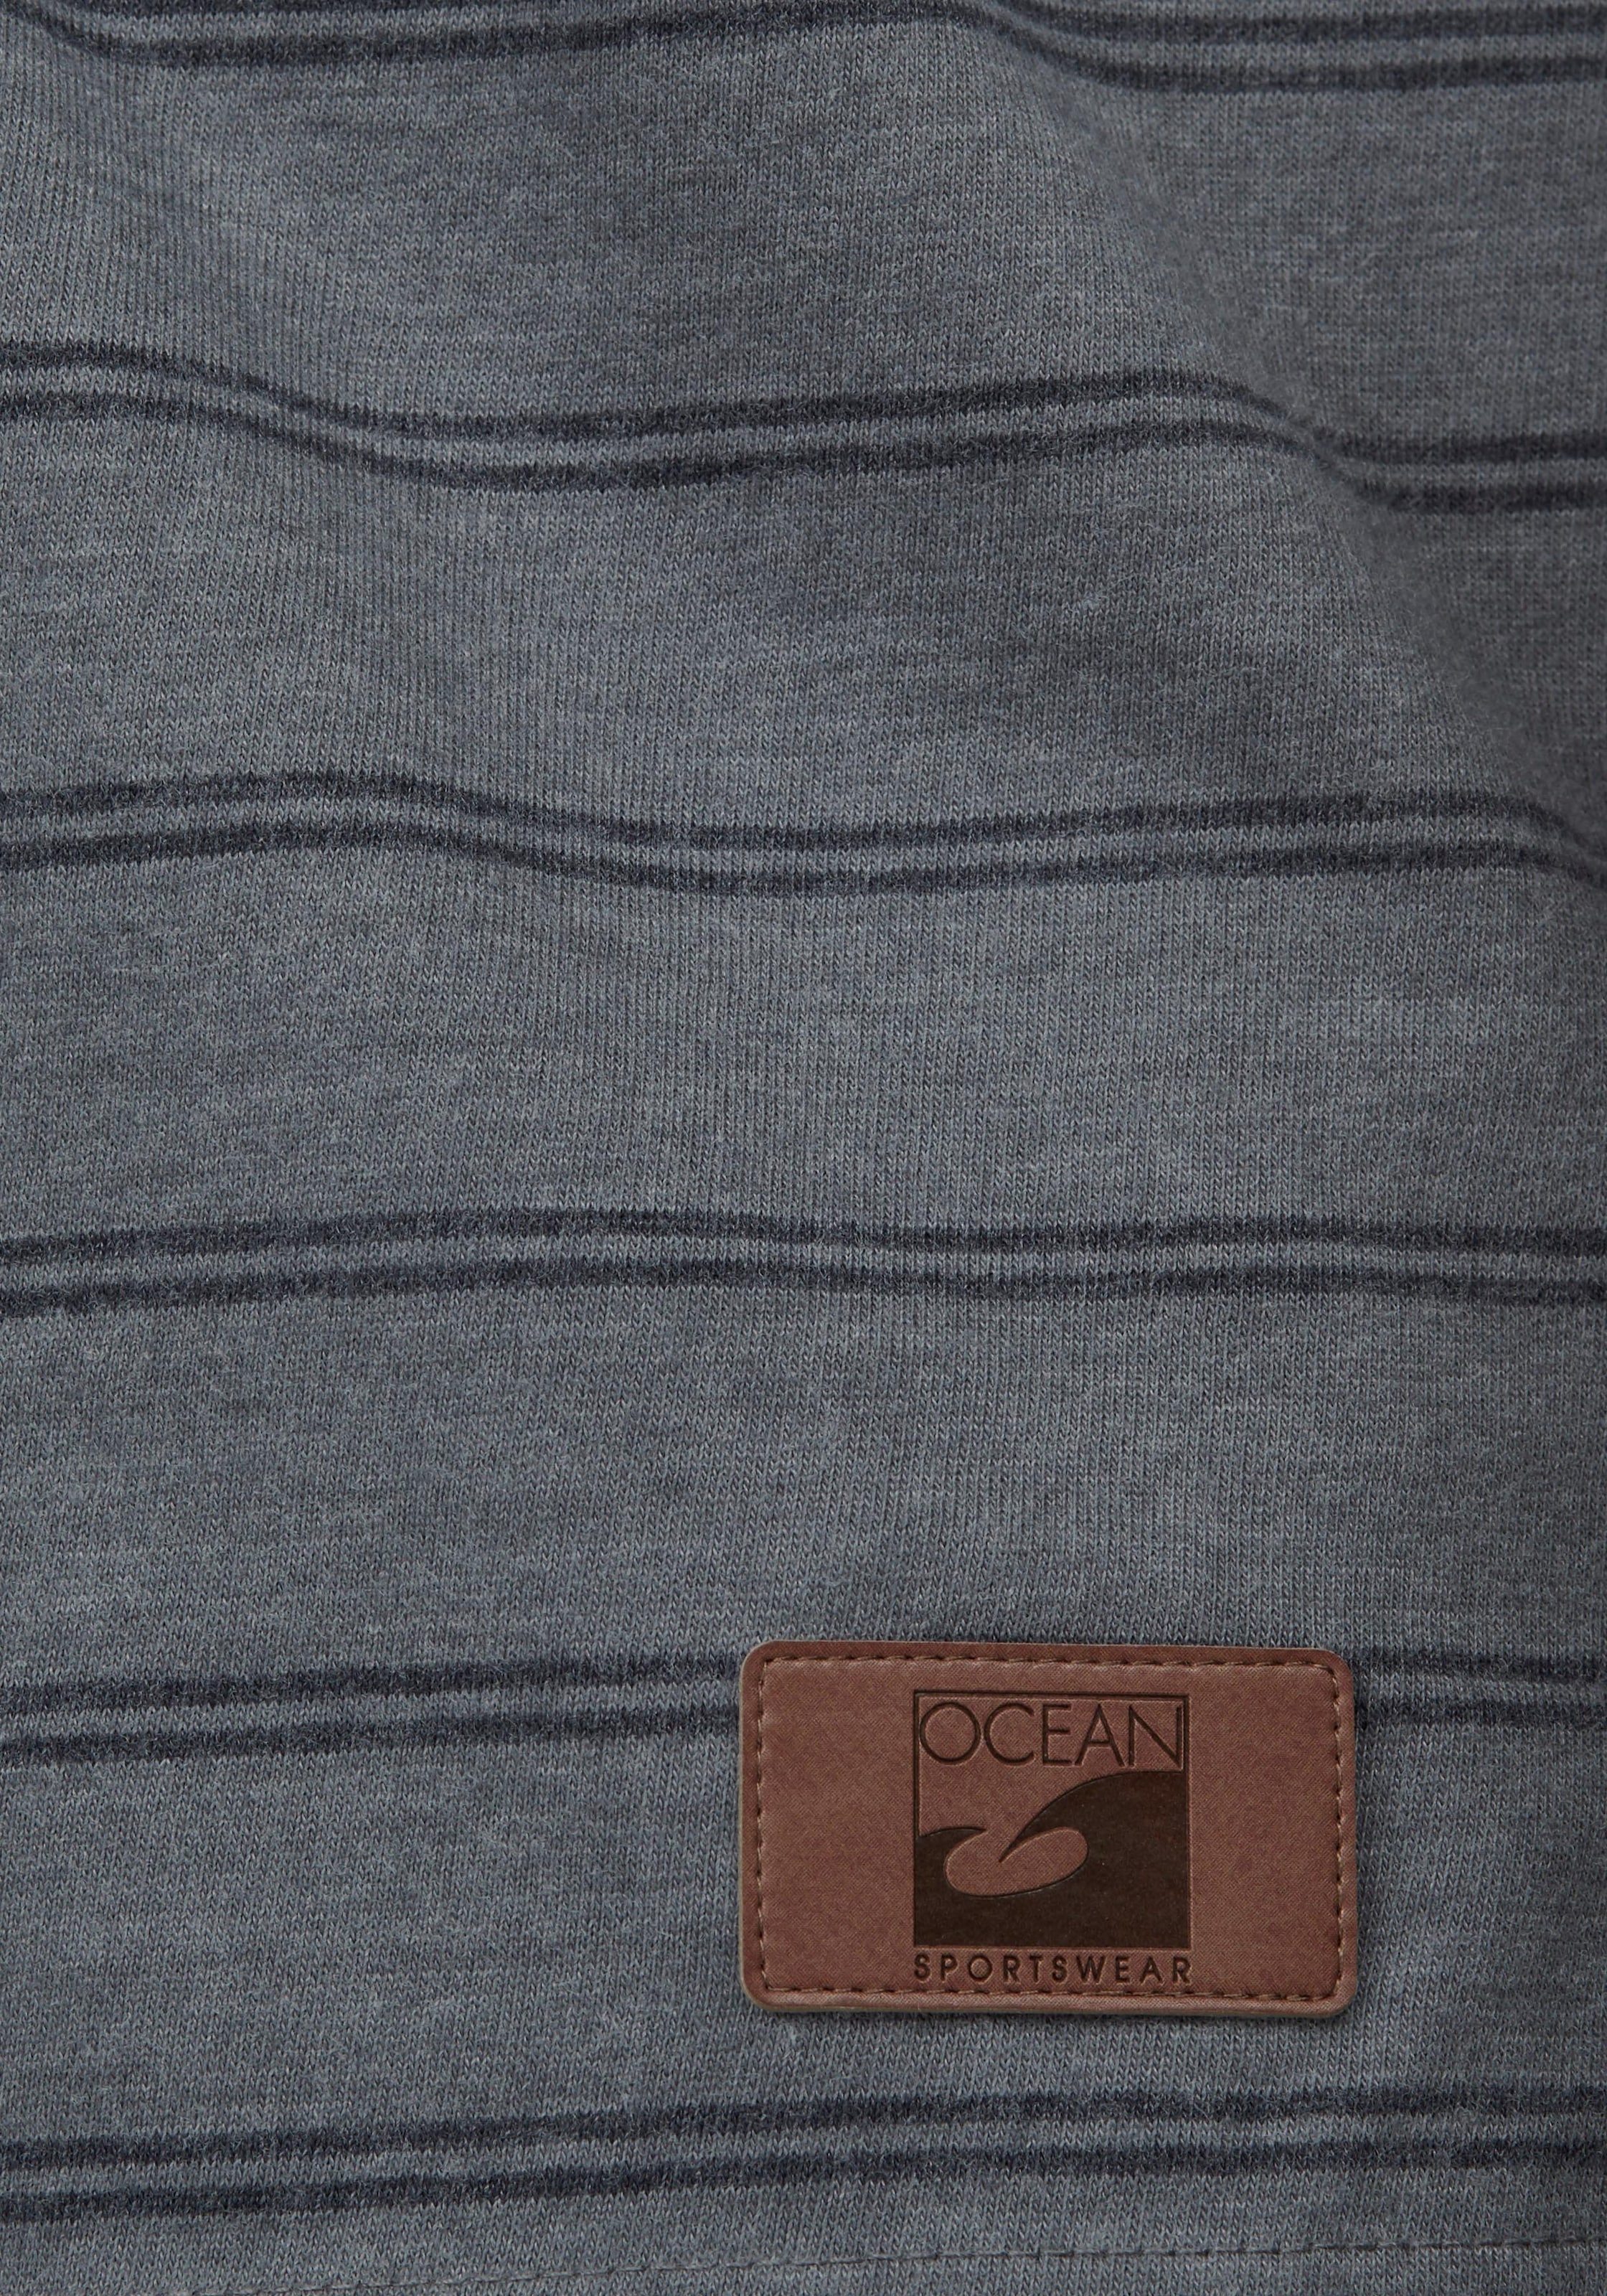 Ocean Sportswear Poloshirt, in Baumwoll-Jersey-Qualität